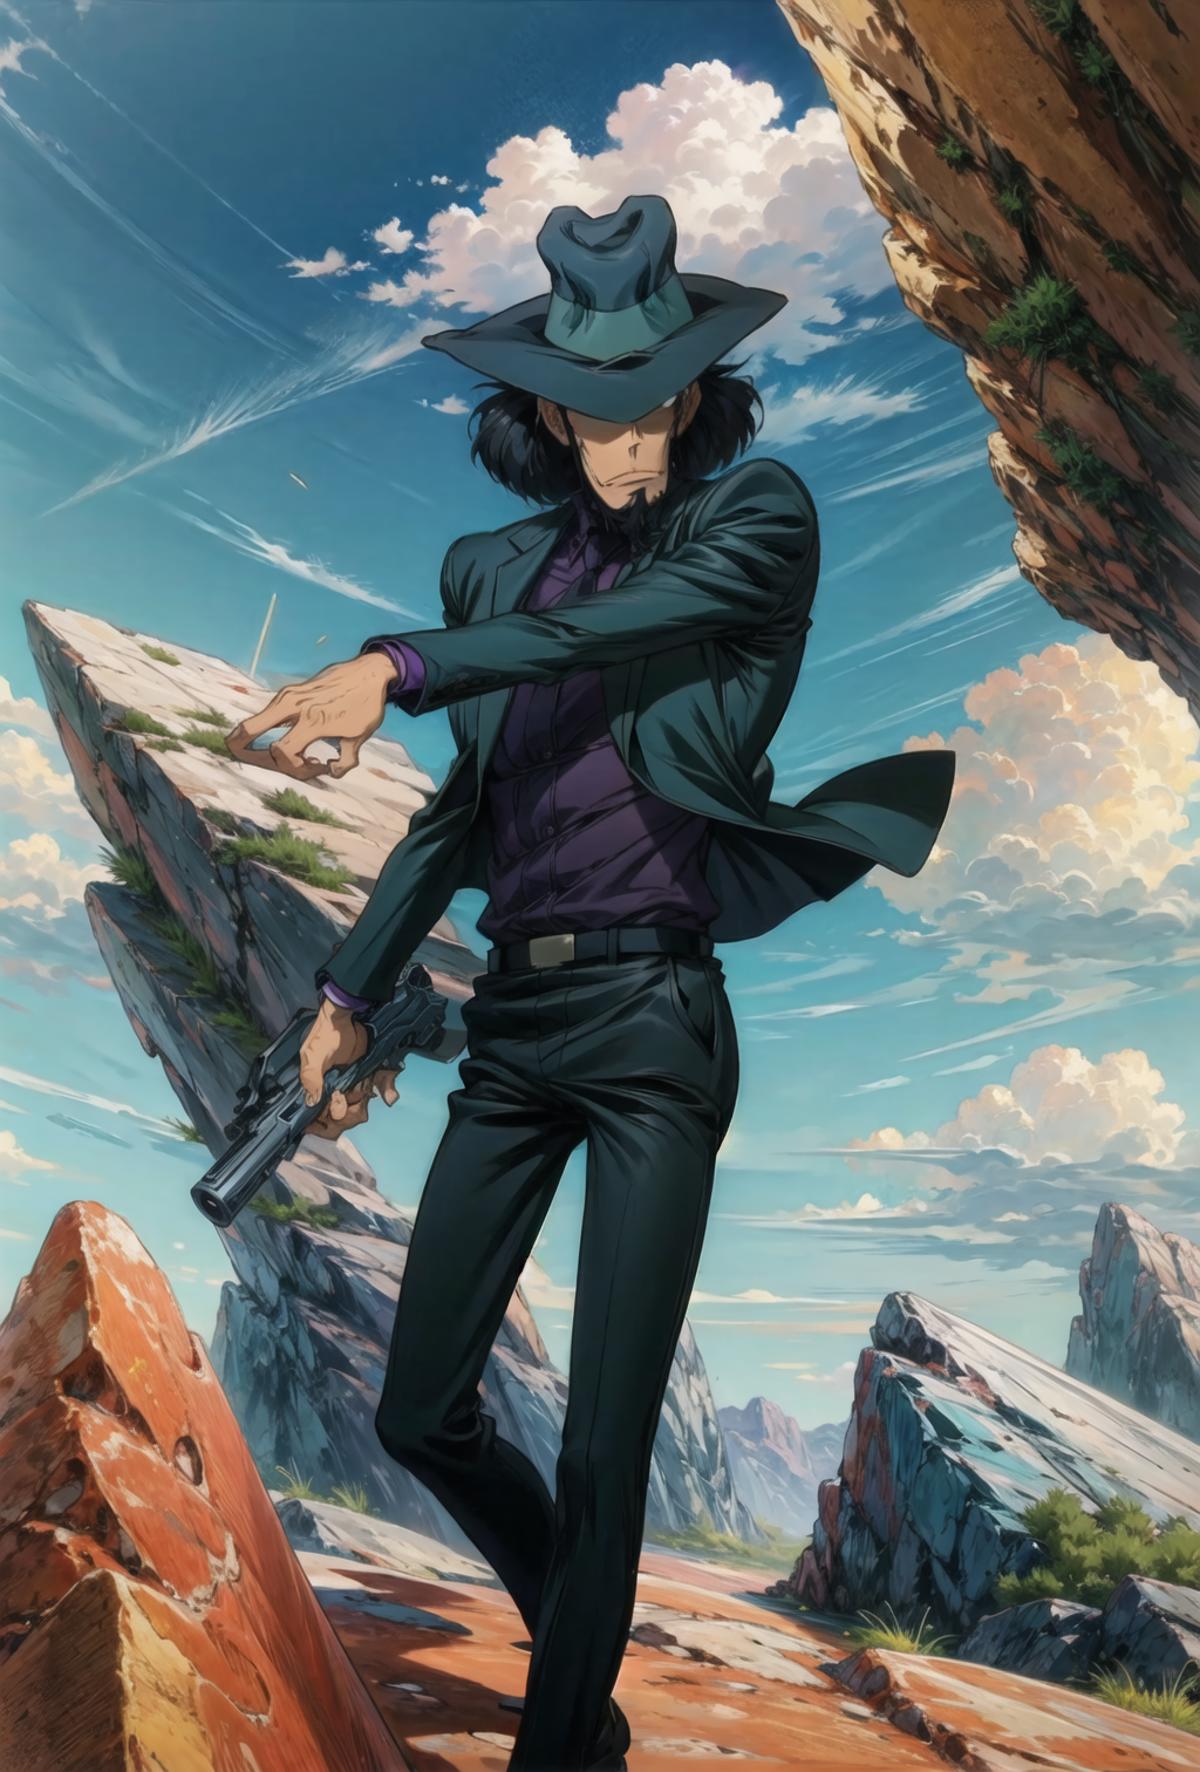 Daisuke Jigen - Lupin III image by Fenchurch